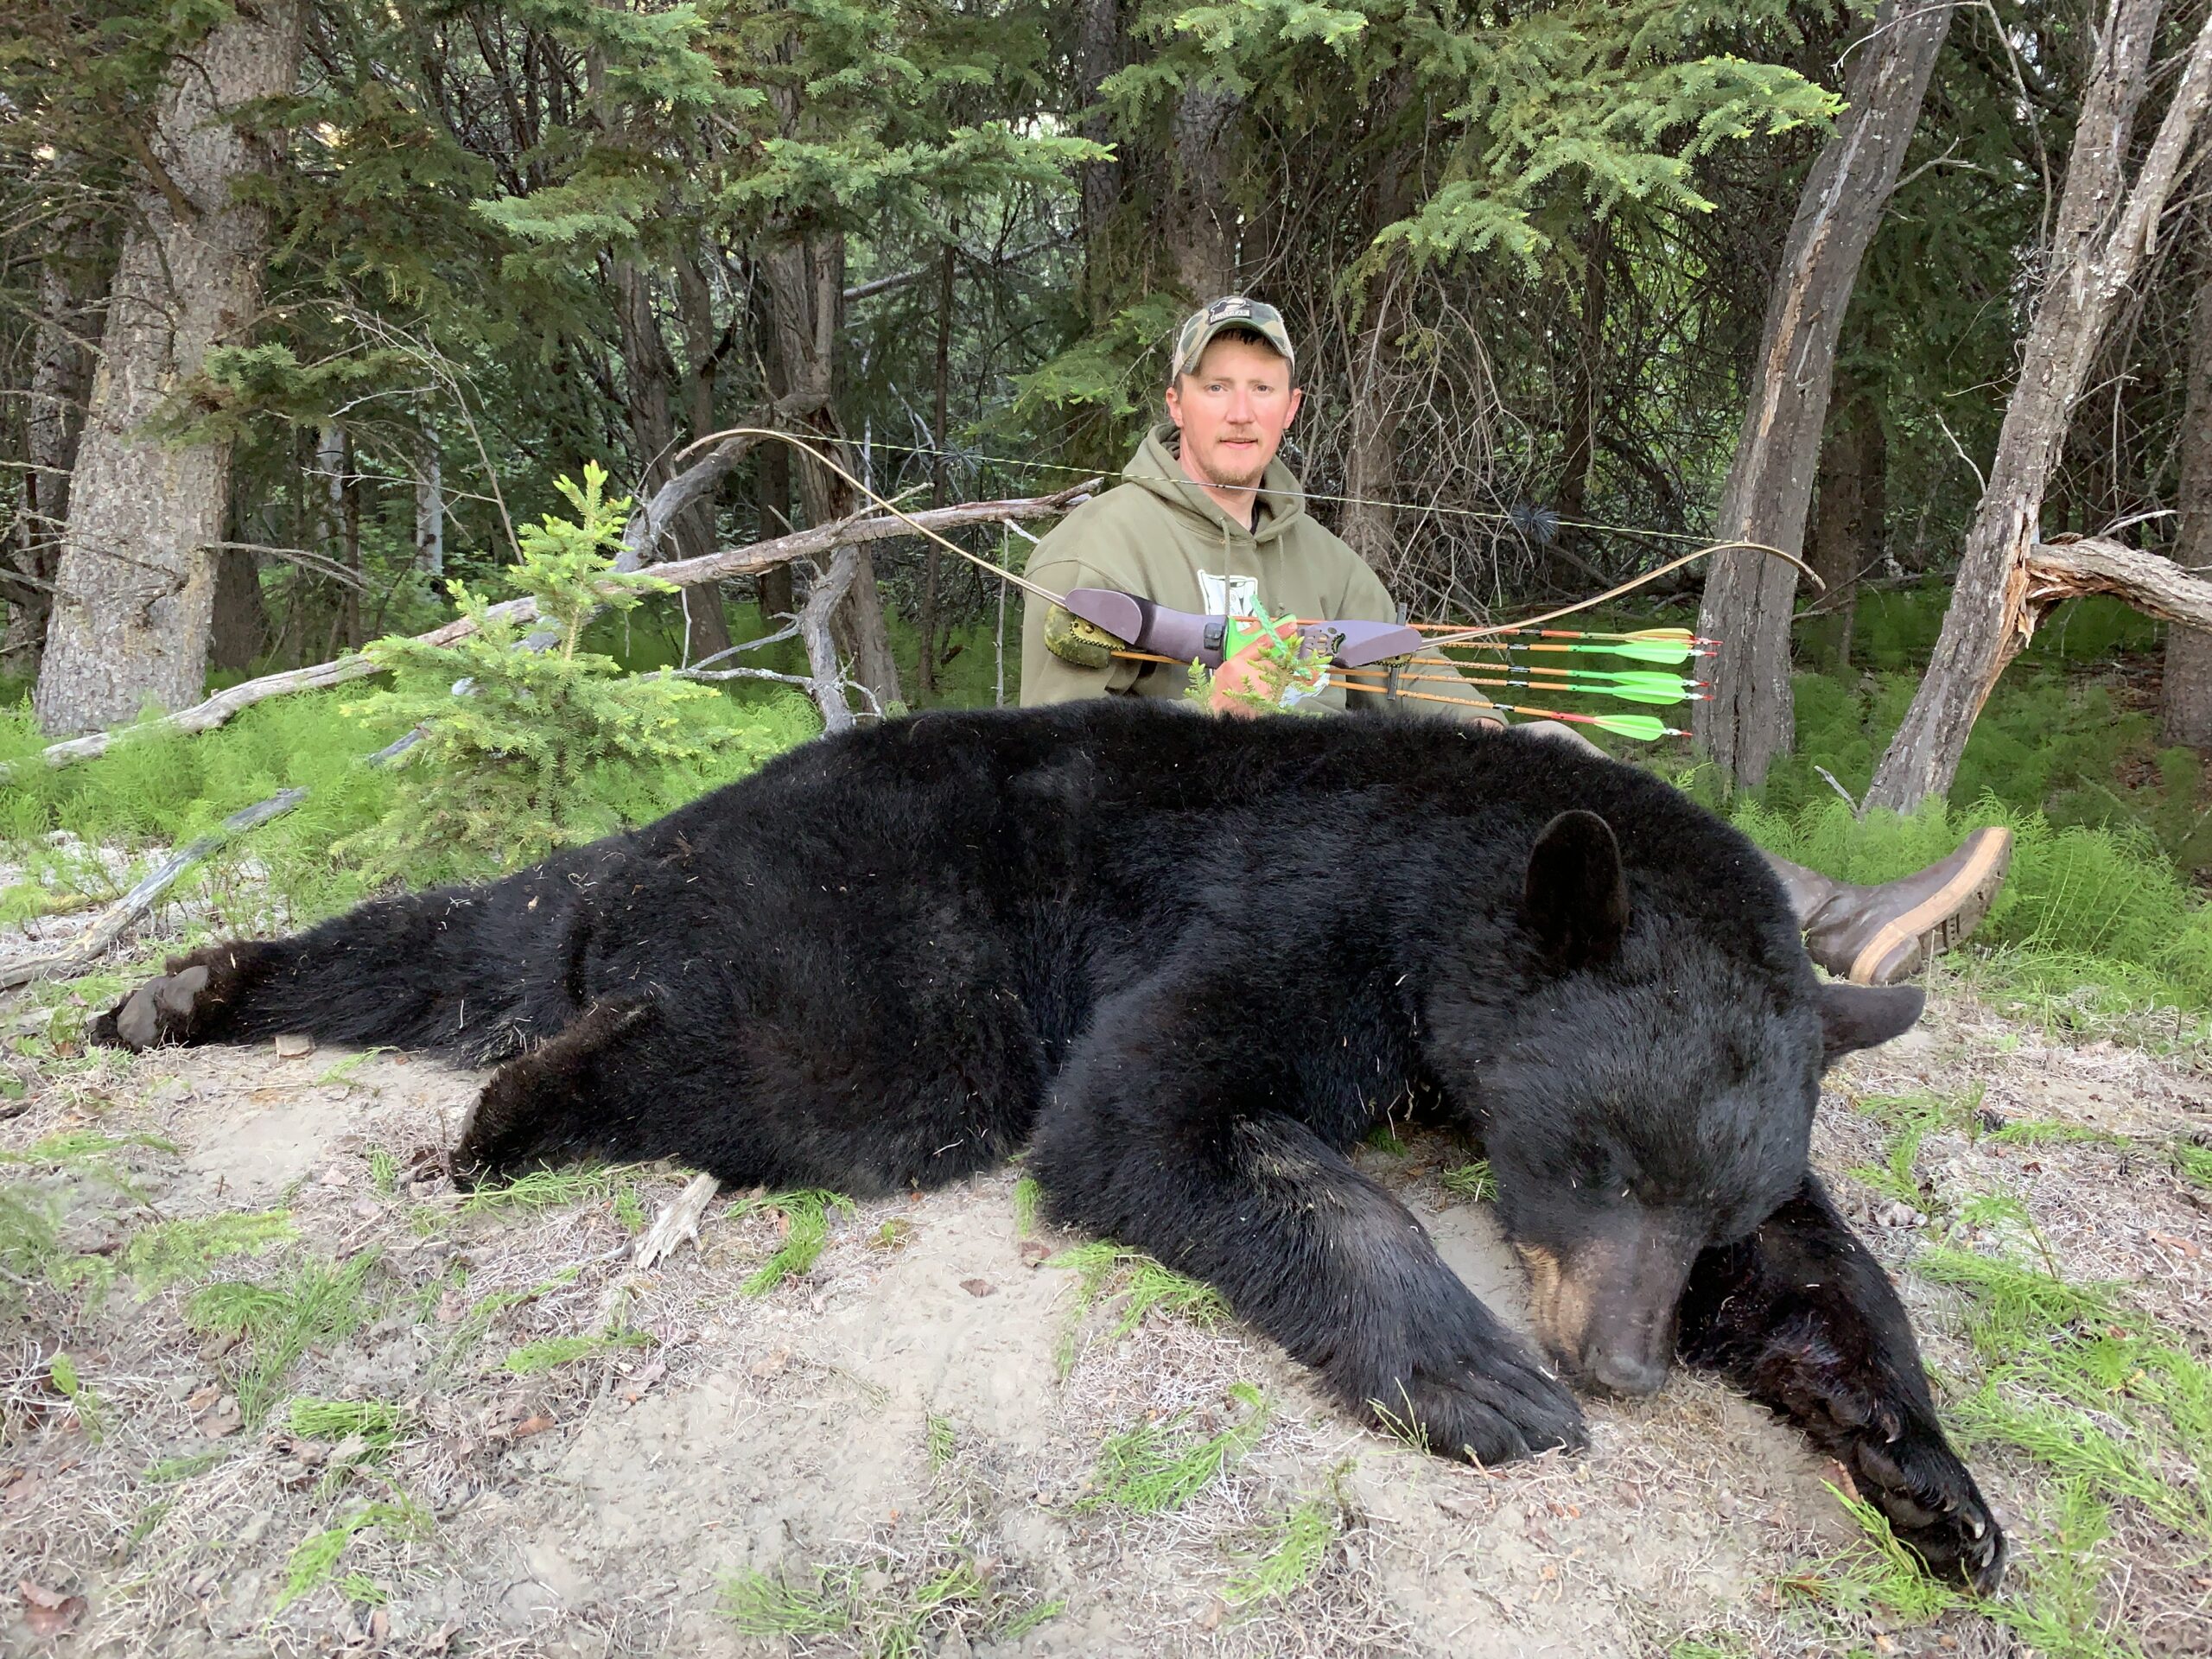 https://www.outdoorlife.com/wp-content/uploads/2023/04/14/archery-black-bear-scaled.jpg?w=2560